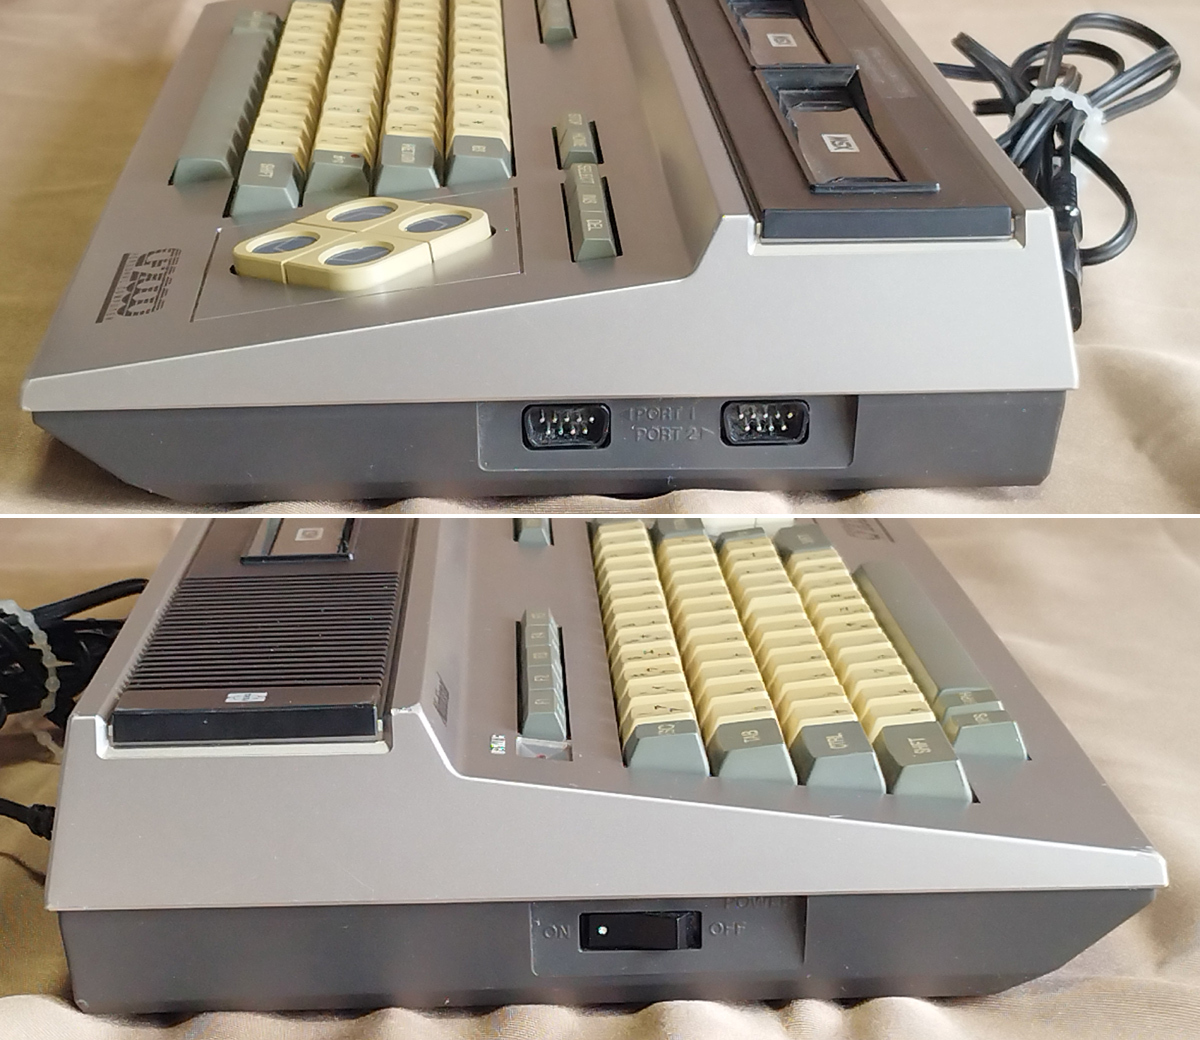 NATIONAL MSX CF-2000 Personal Computer personal computer / RAM 16kB installing National Matsushita Electric Industrial 